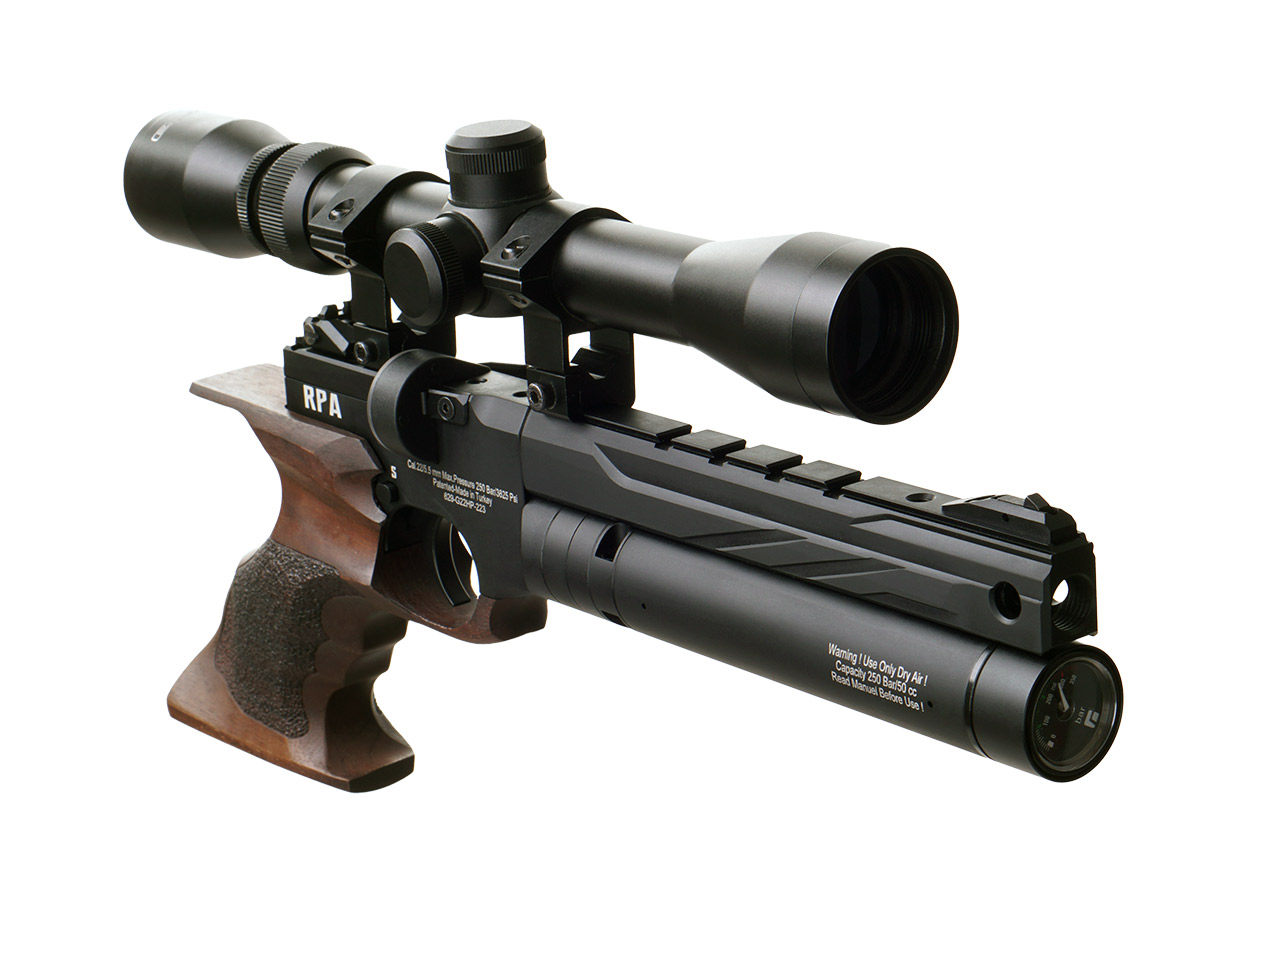 Pressluftpistole Reximex RPA Walnussholz Griff Regulator Kaliber 4,5 mm (P18)